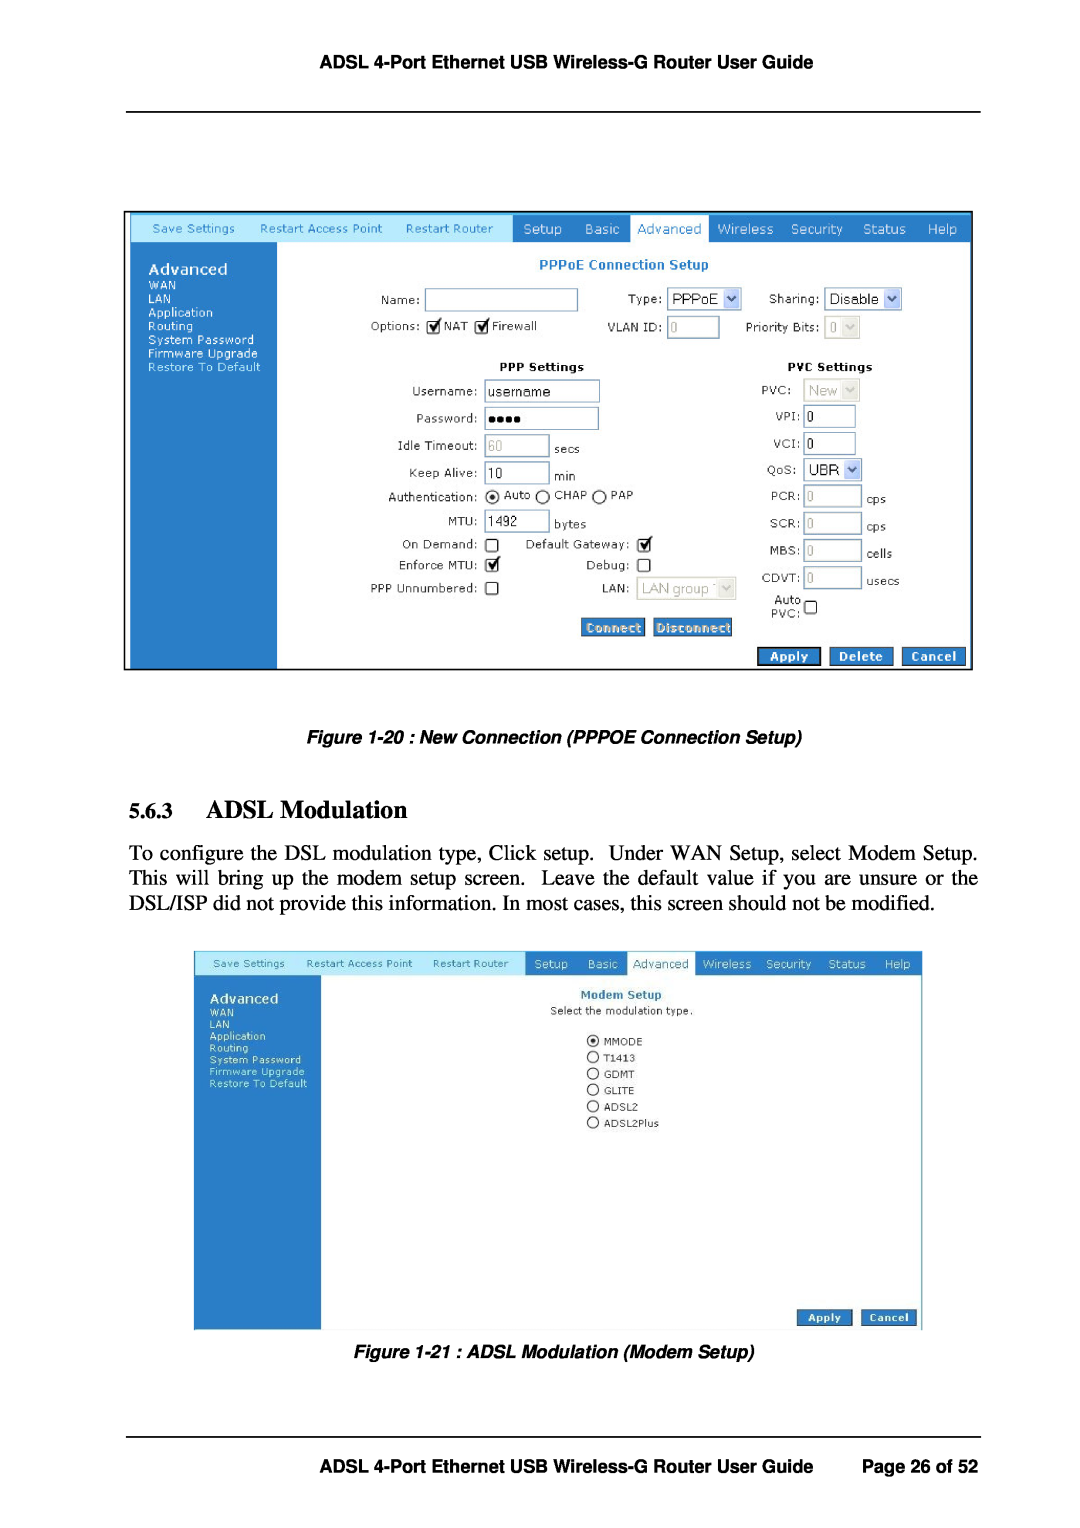 APC ADSL 4-Port manual 20 New Connection PPPOE Connection Setup, 21 ADSL Modulation Modem Setup 